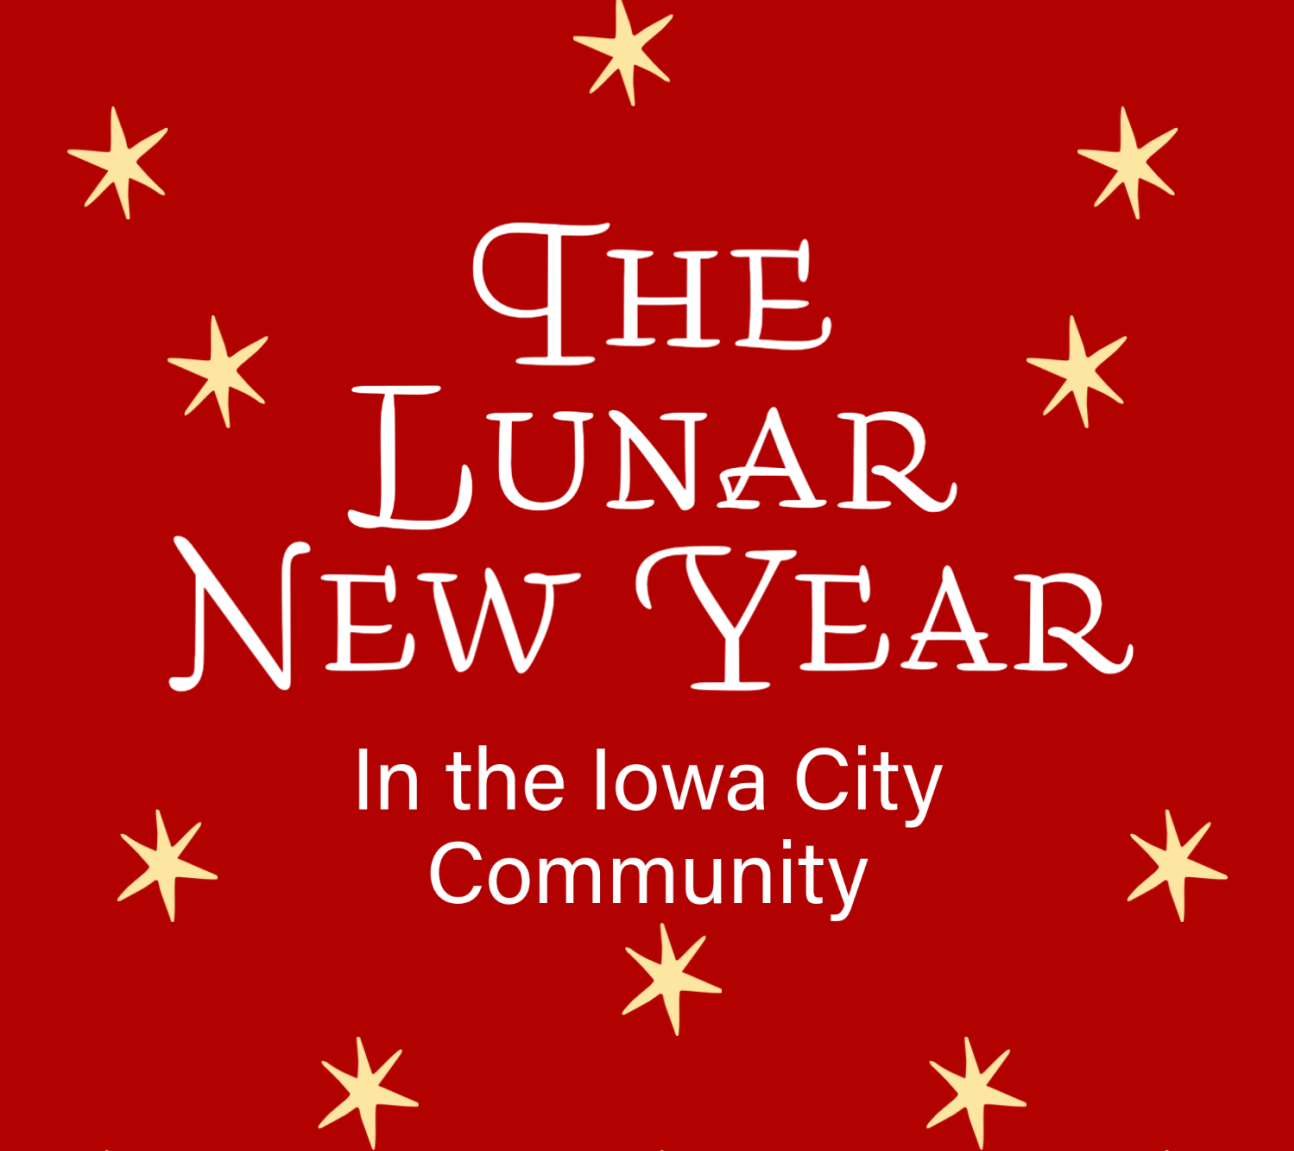 Lunar new year in the Iowa City community